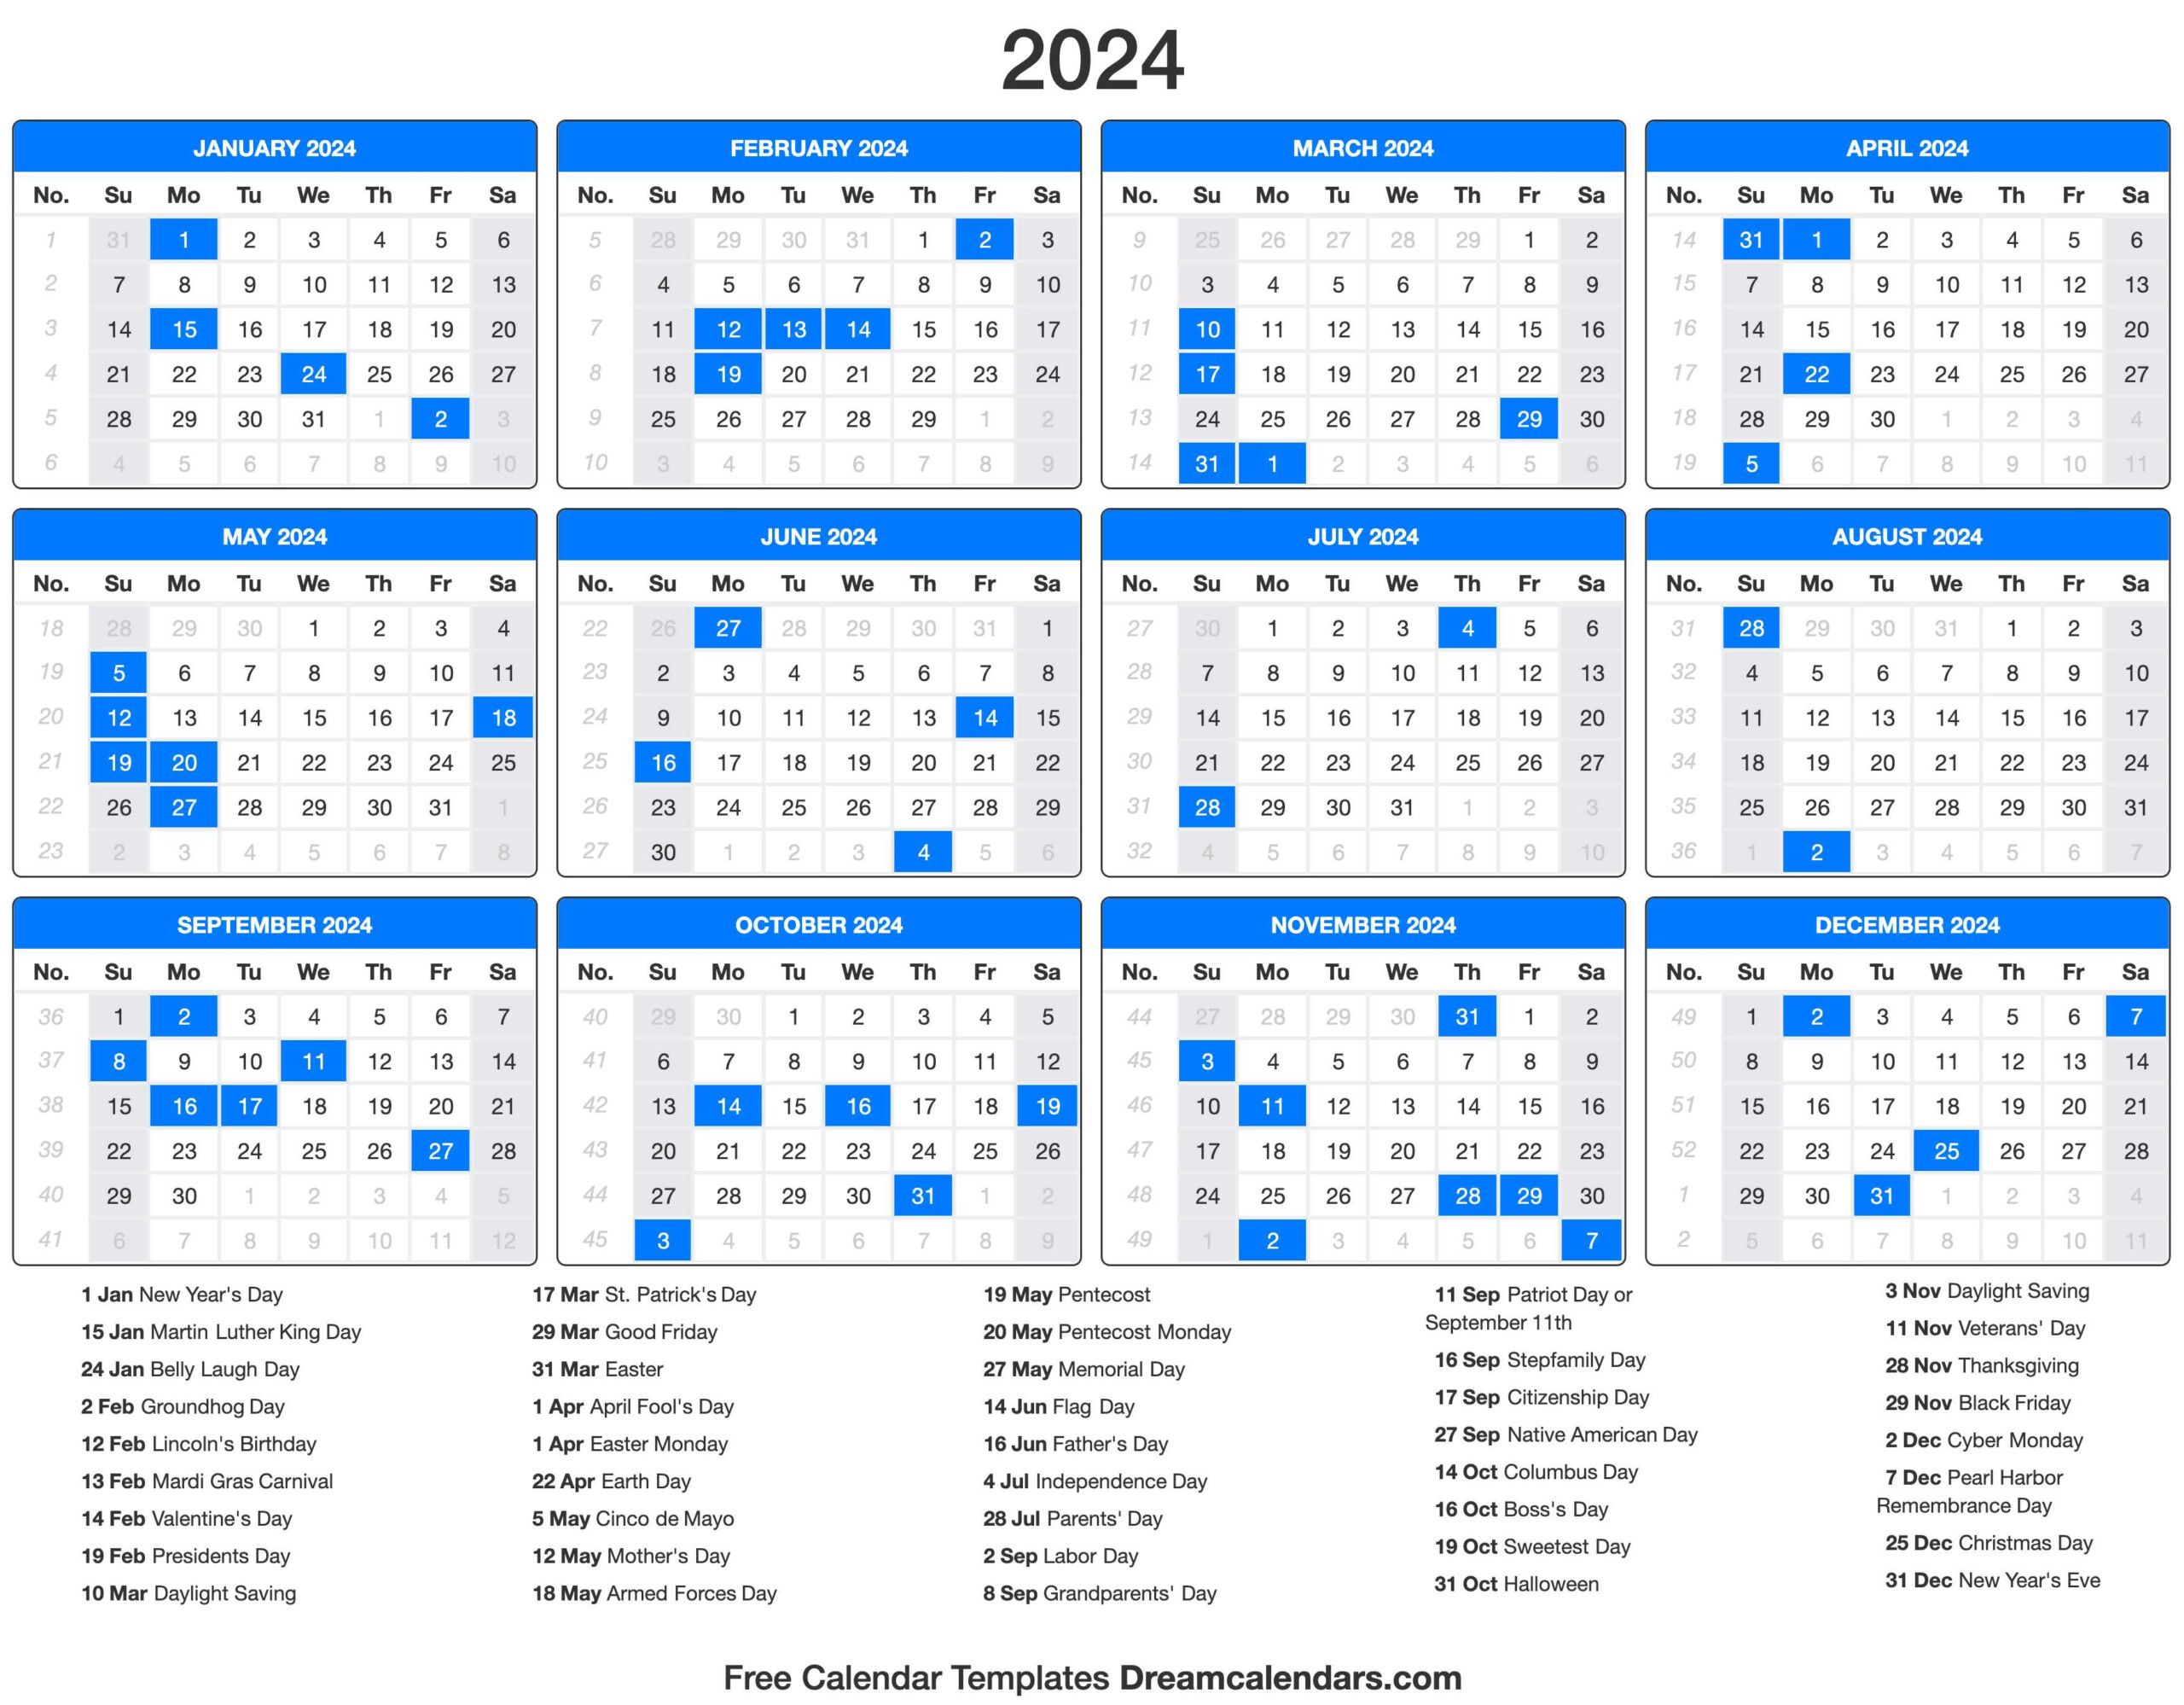 Thanksgiving 2024 Date Calendar Elvira Blondelle